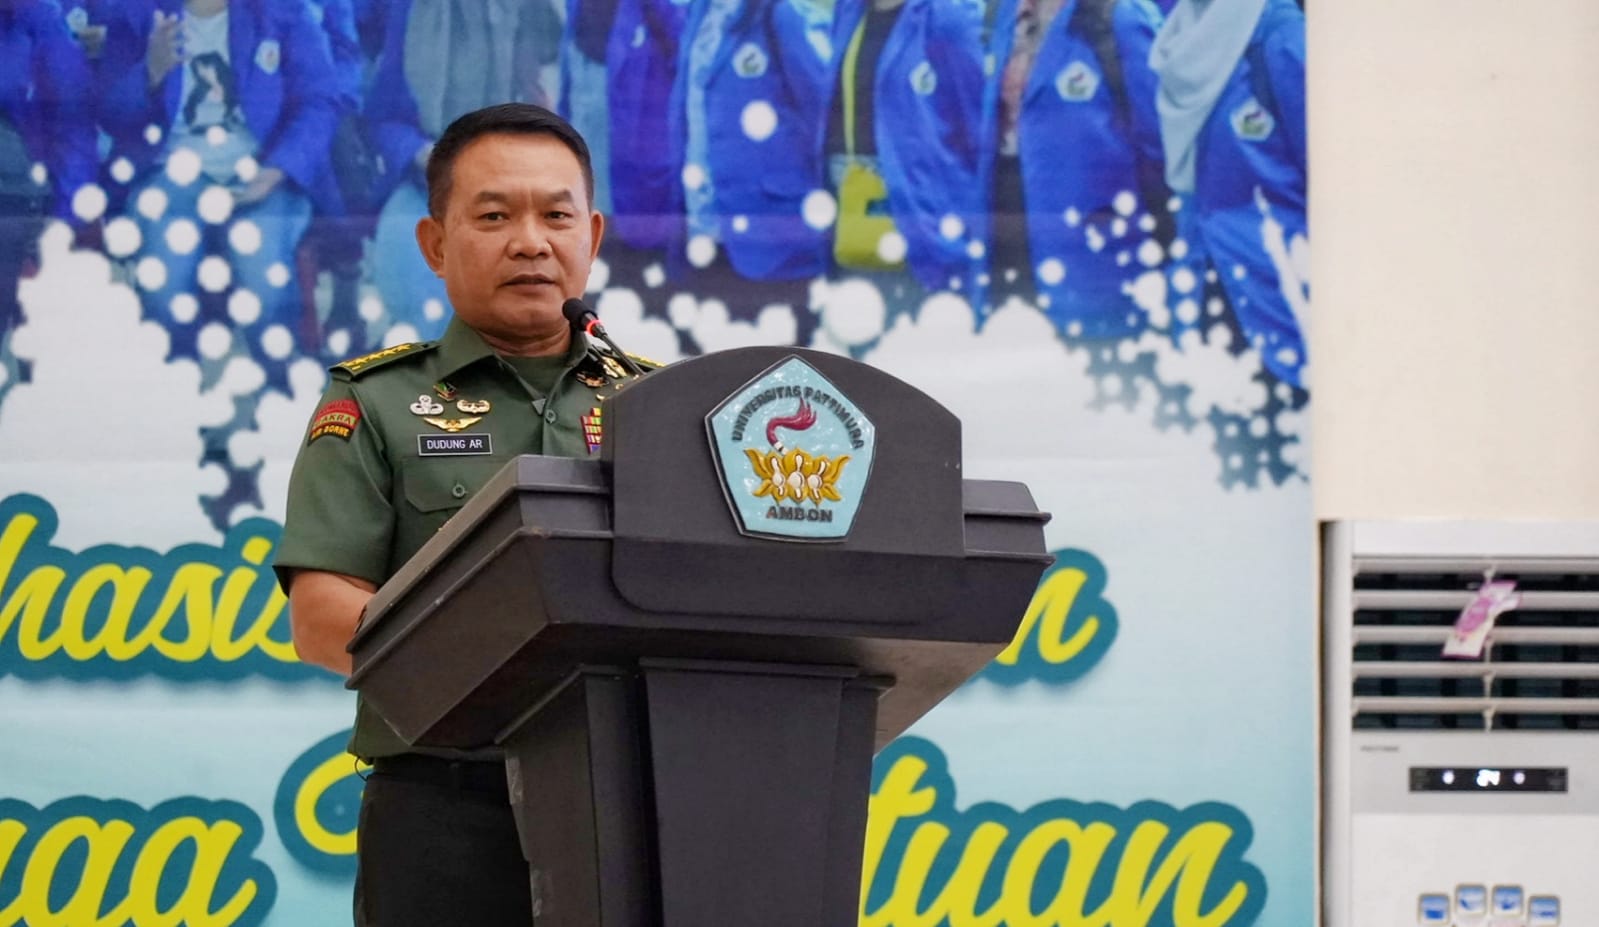 Jenderal TNI Dudung Abdurachman, S.E., M.M.